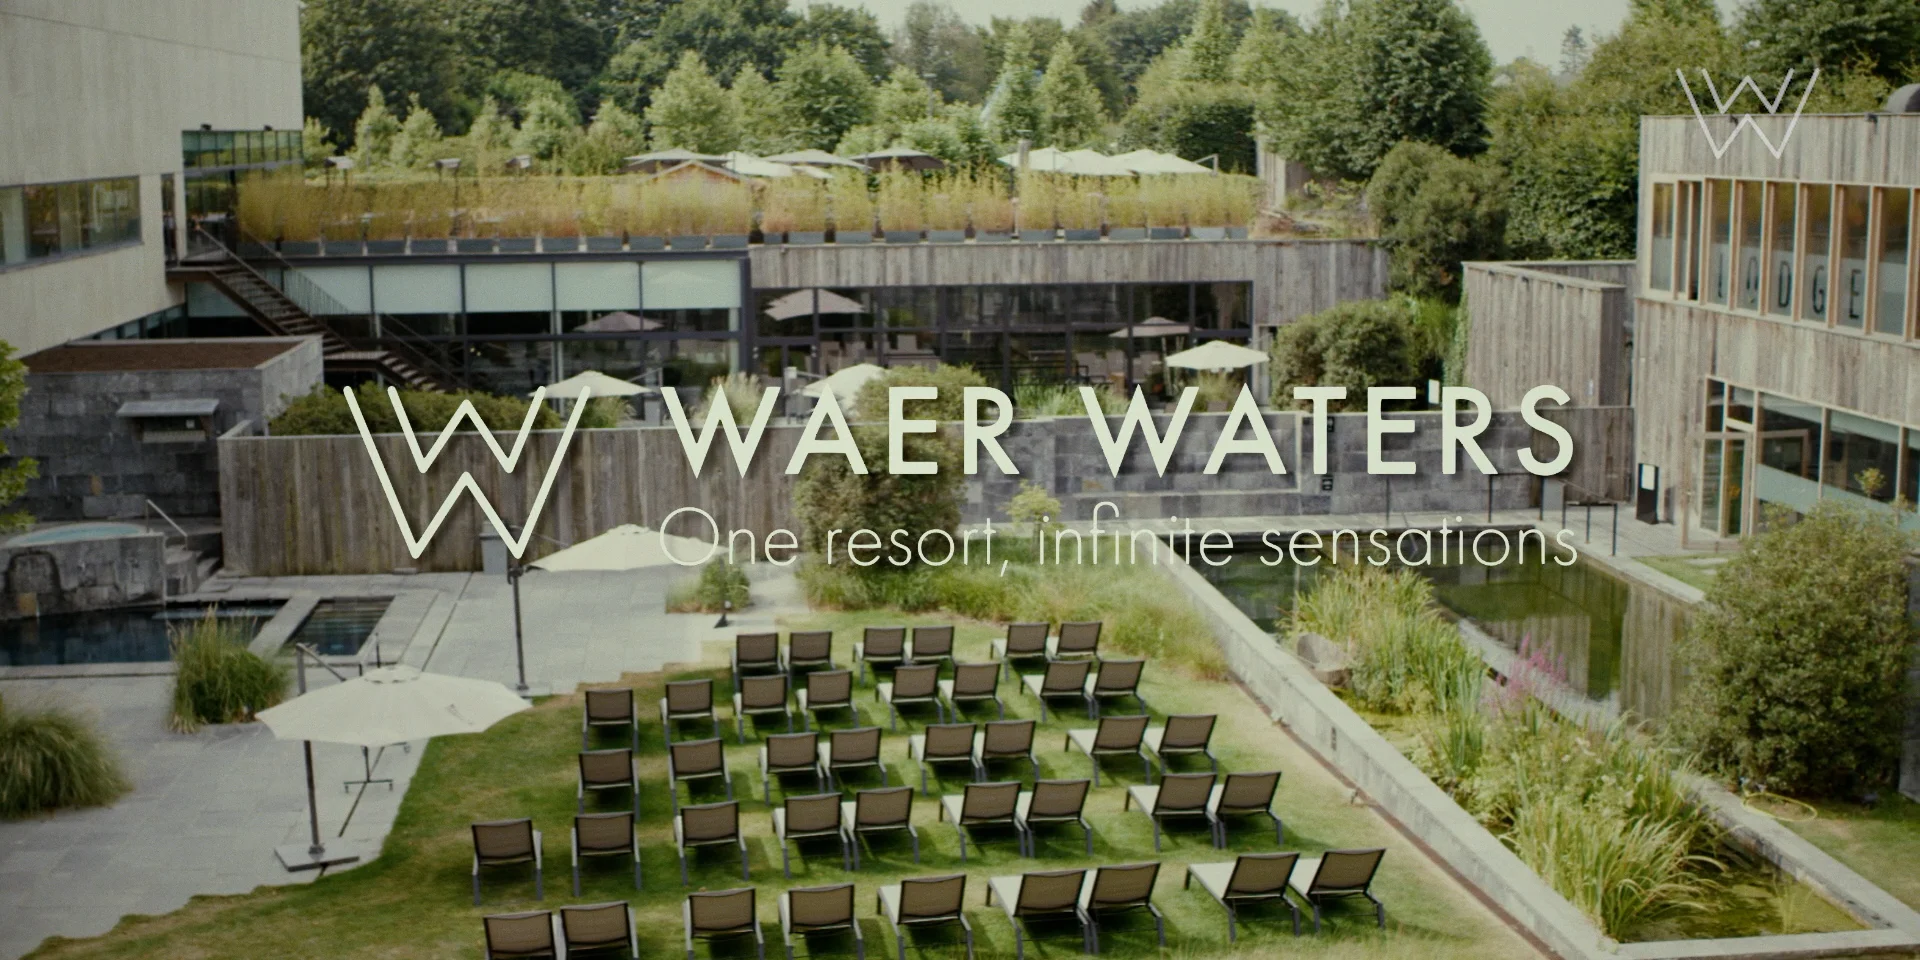 Moodfilm Waer Waters definitief.mp4 on Vimeo